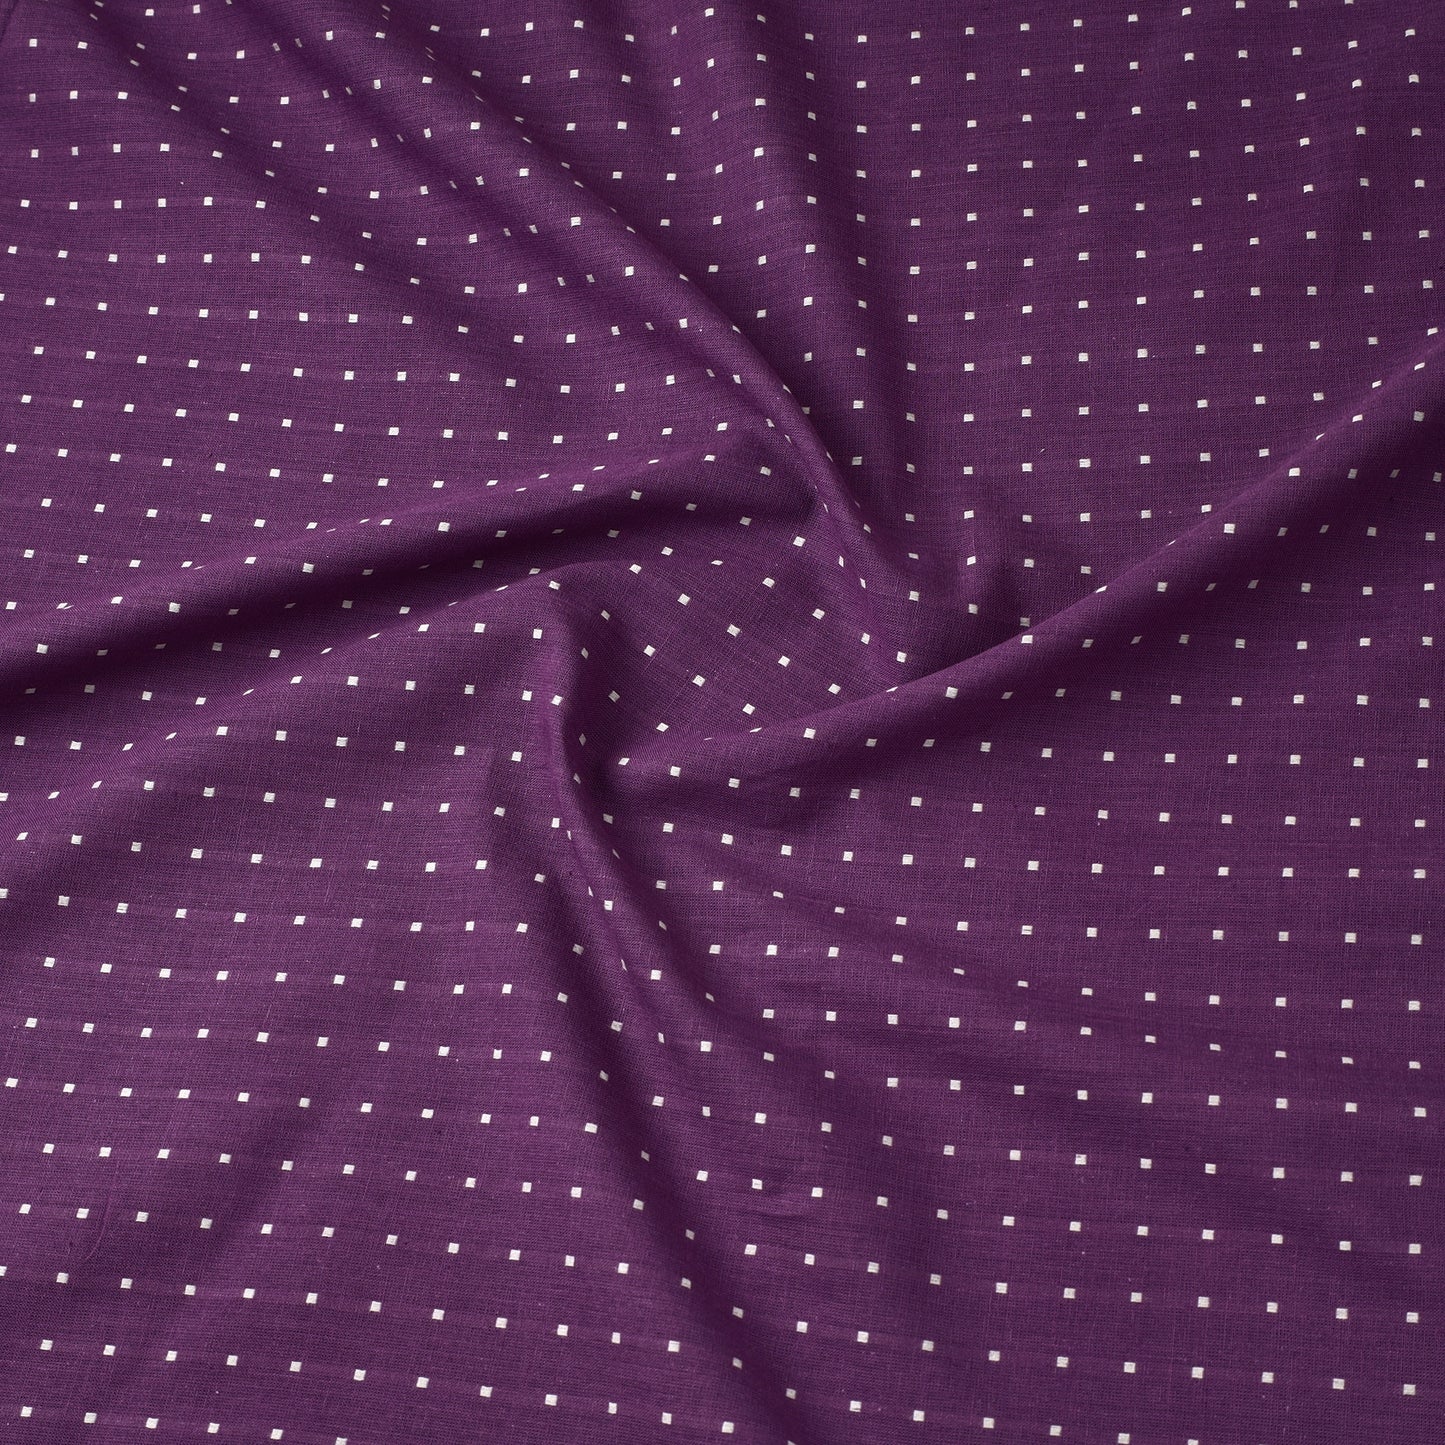 Purple - Jacquard Prewashed Cotton Fabric 02